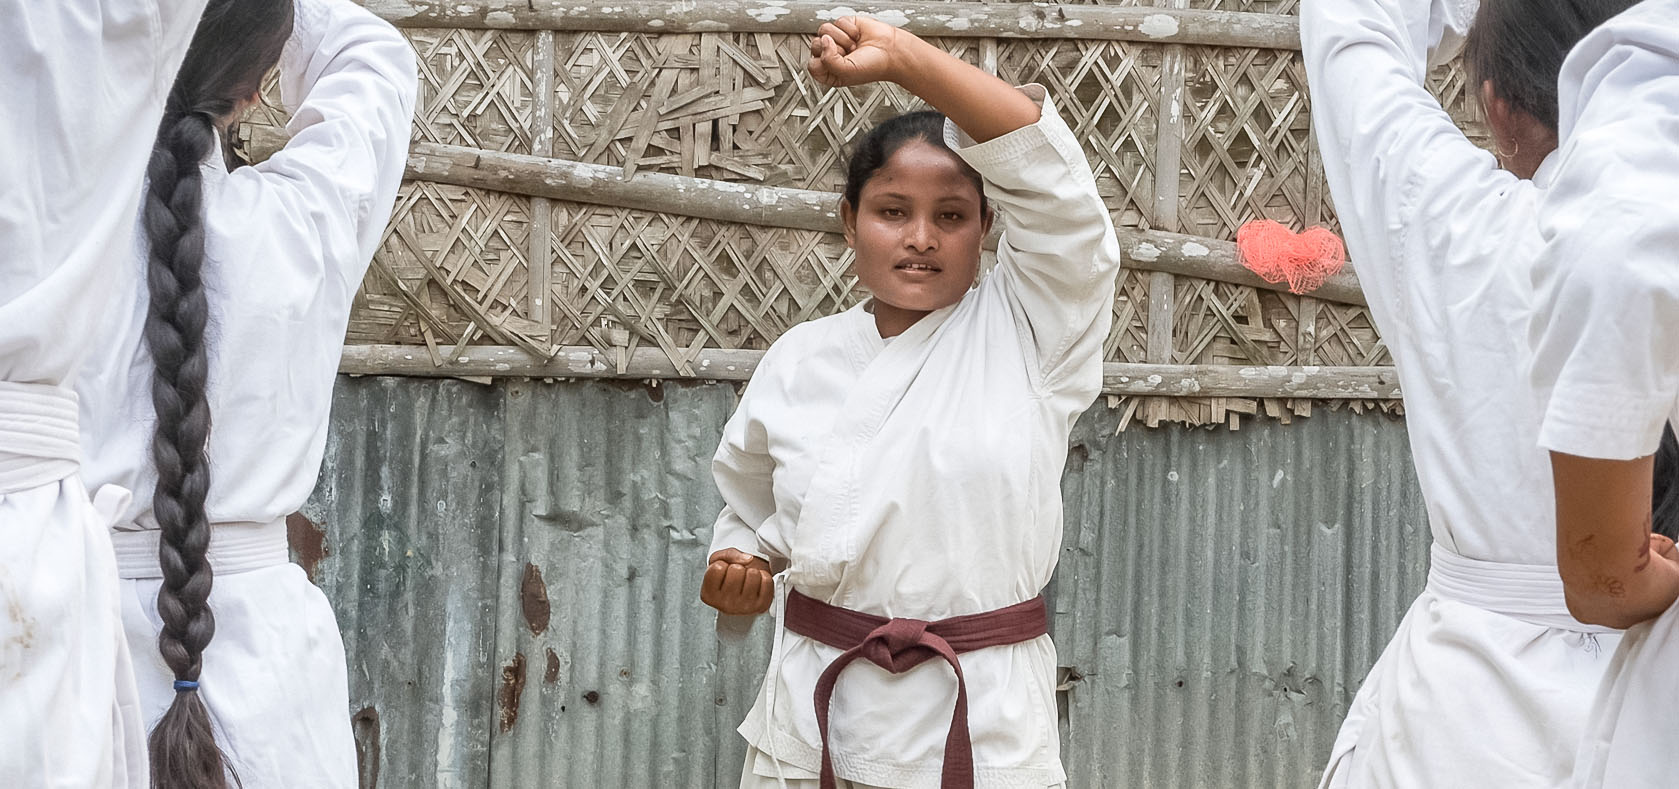 Gaiotree Roy teaches self-defense to girls in her community in Joldhaka, Rangpur, northern Bangladesh. Photo: Mahmud Rahman